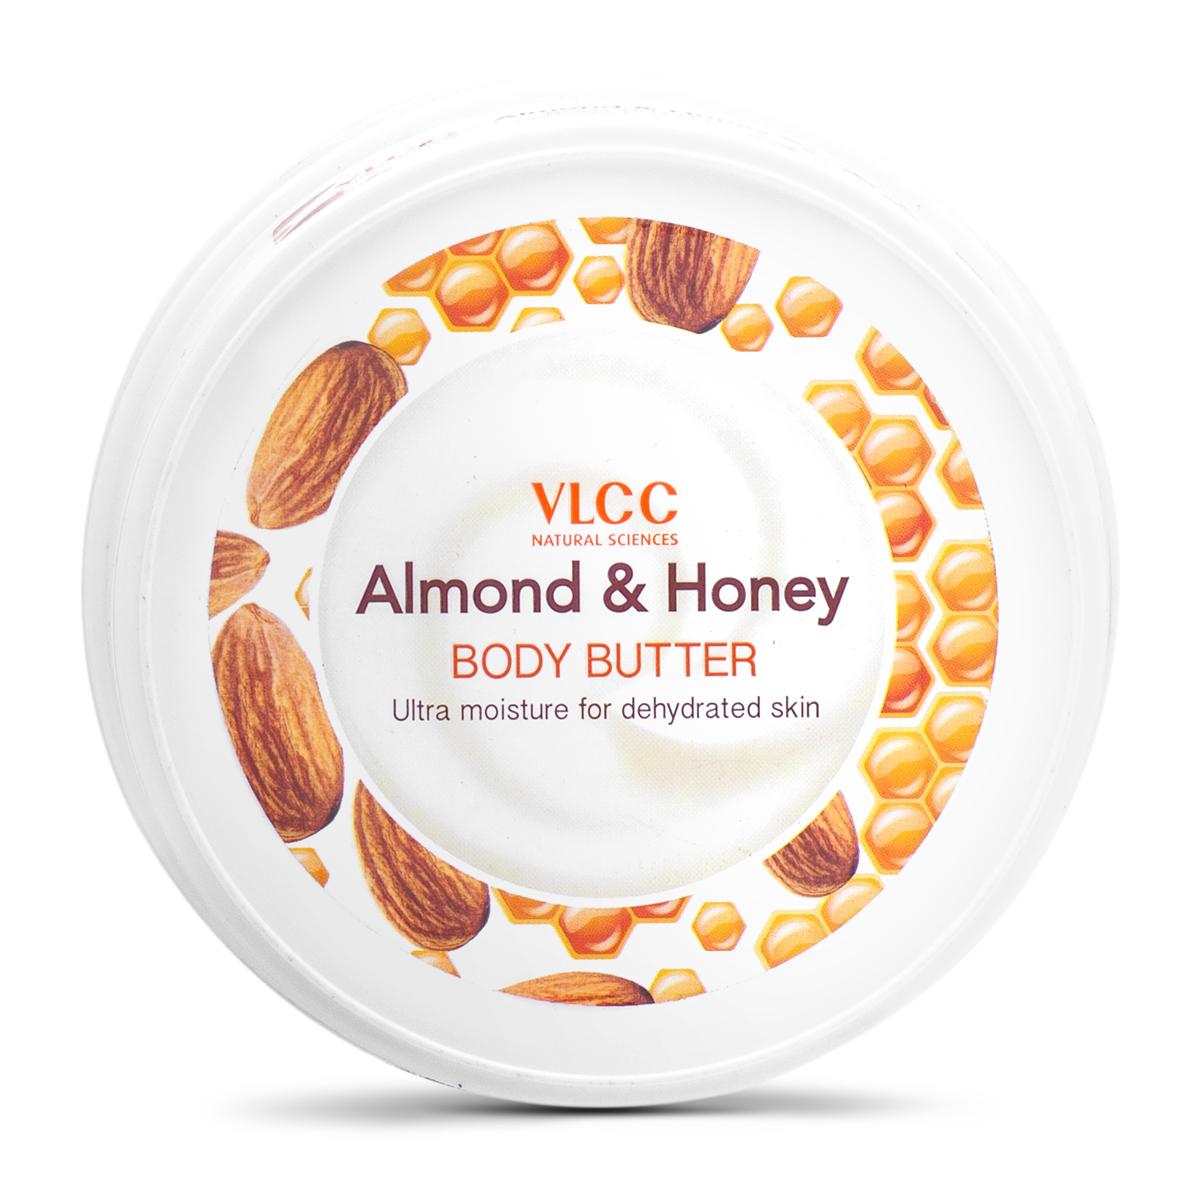 VLCC Almond & Honey Body Butter - Embrace Silky Smooth Skin